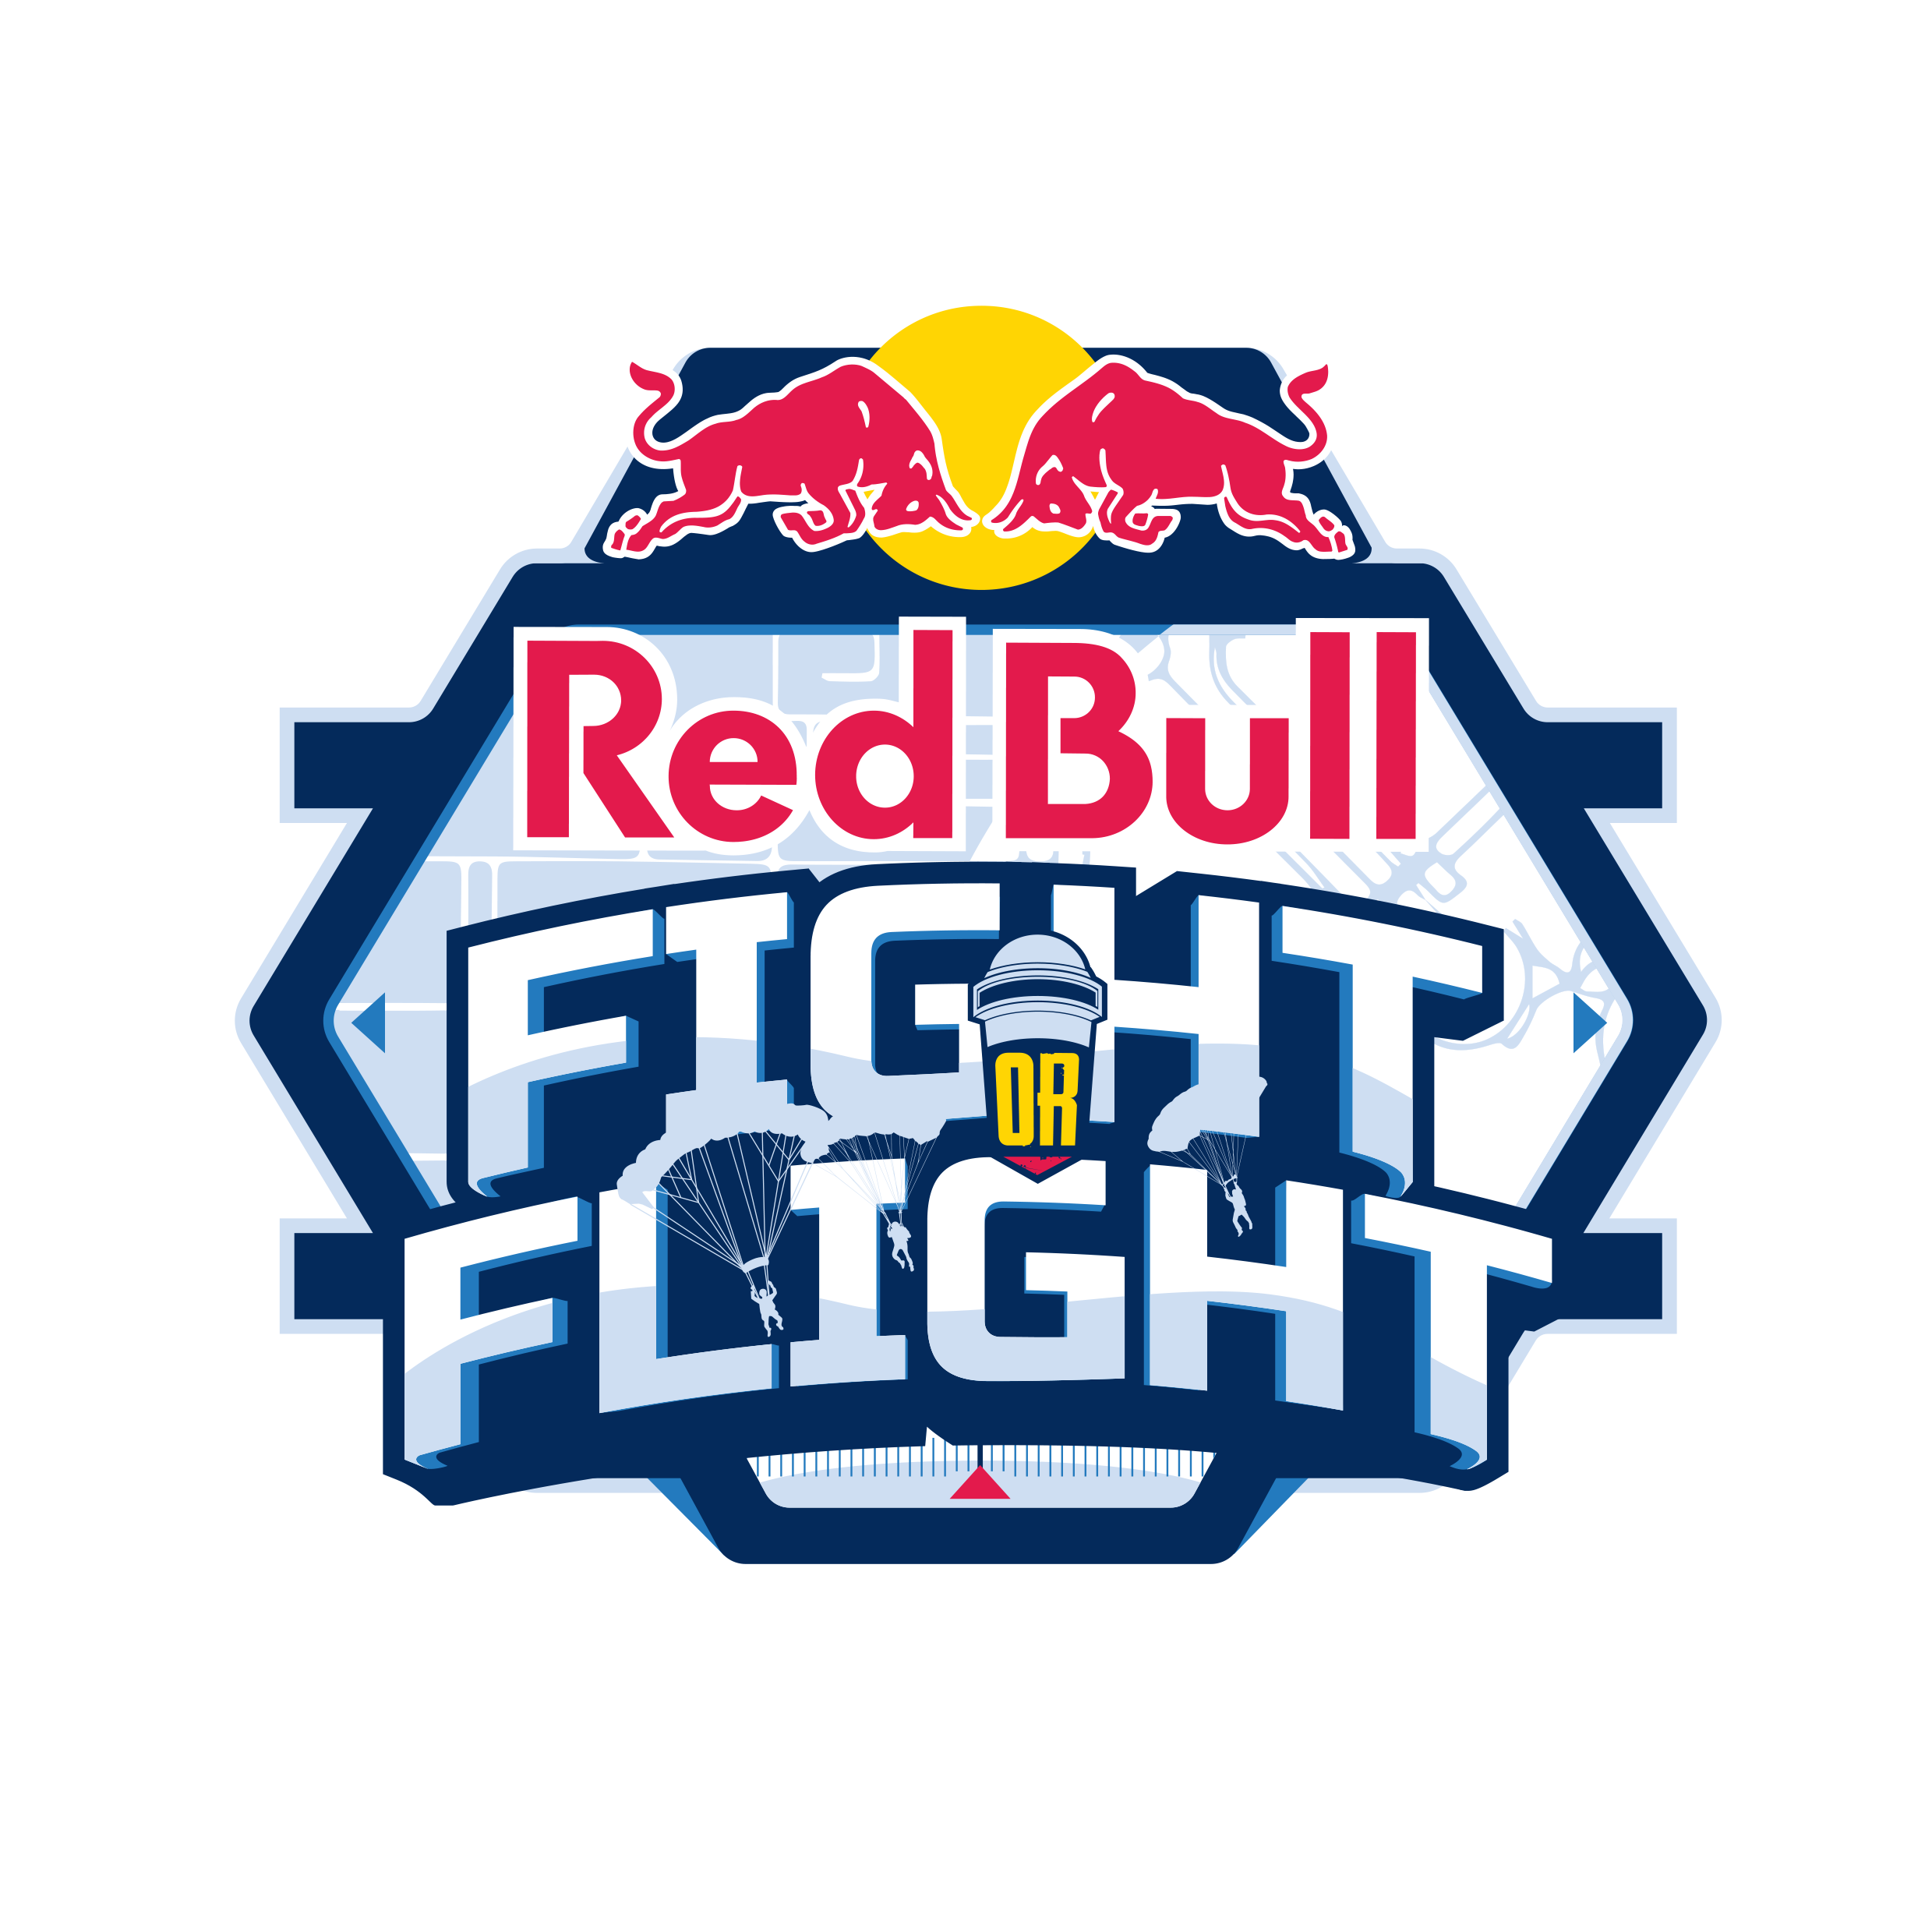 FightorFlight-logo-FINAL